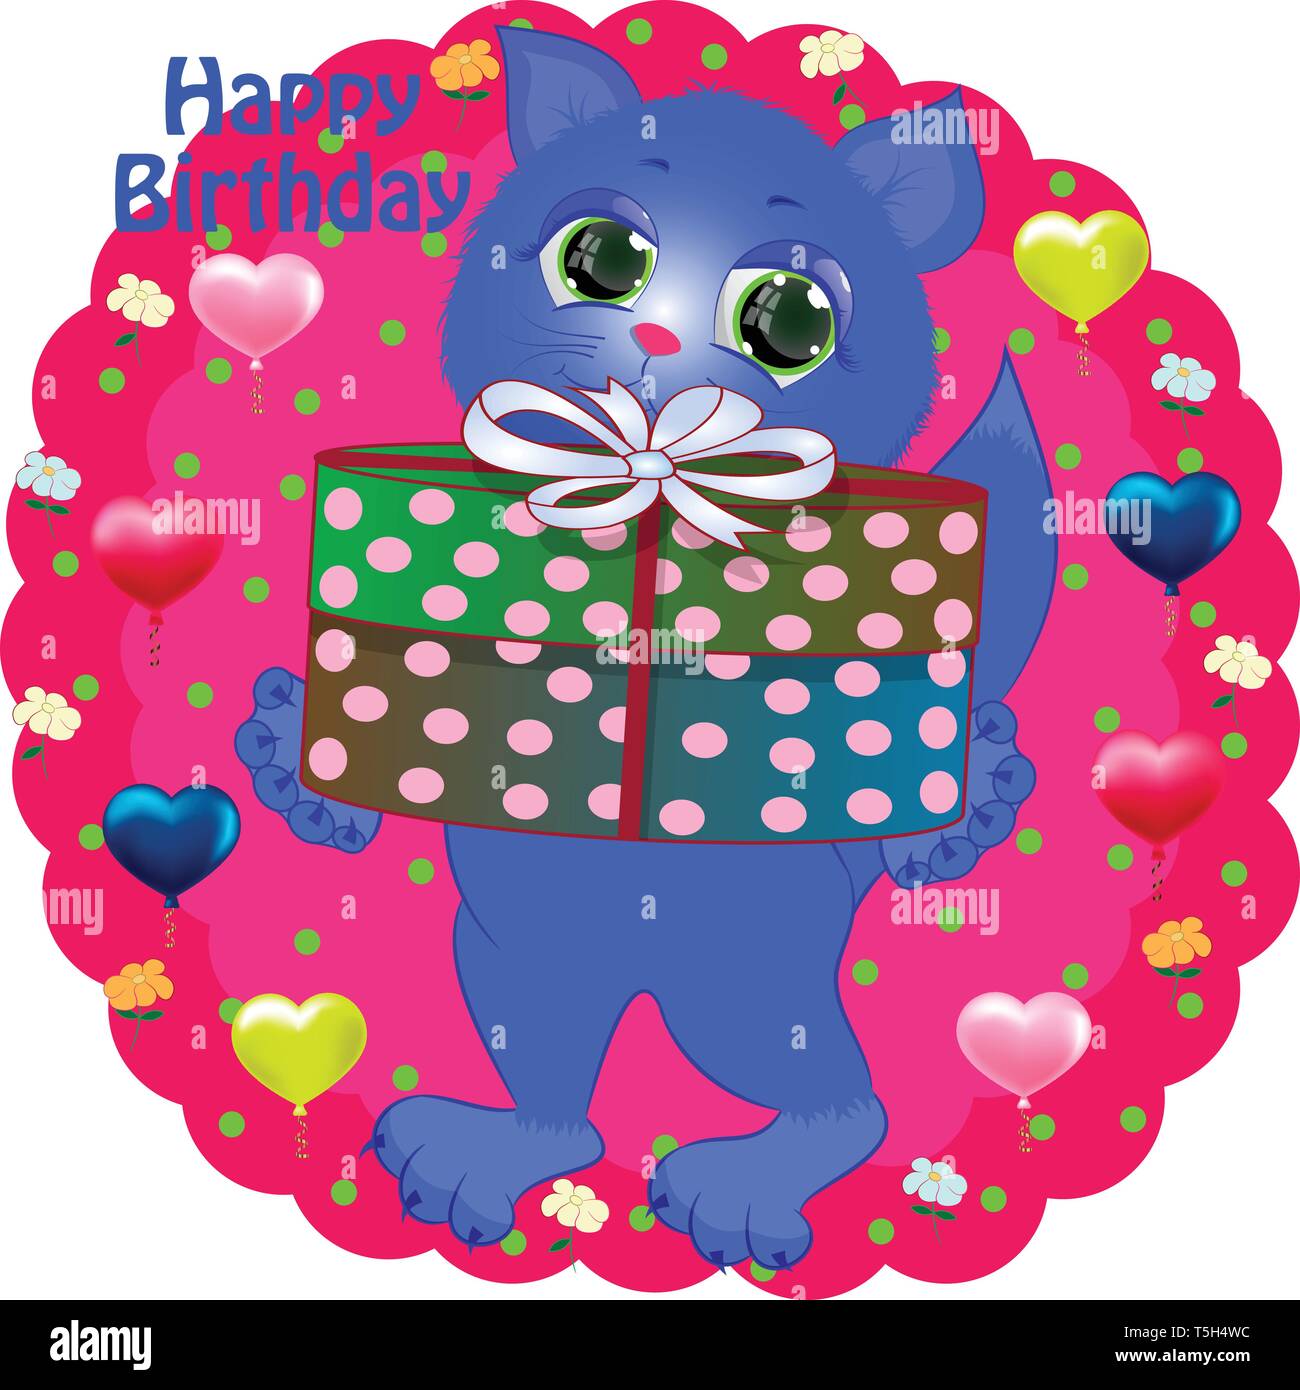 birthday greeting card with cat. cartoon cat vector illustration. Stock Vector